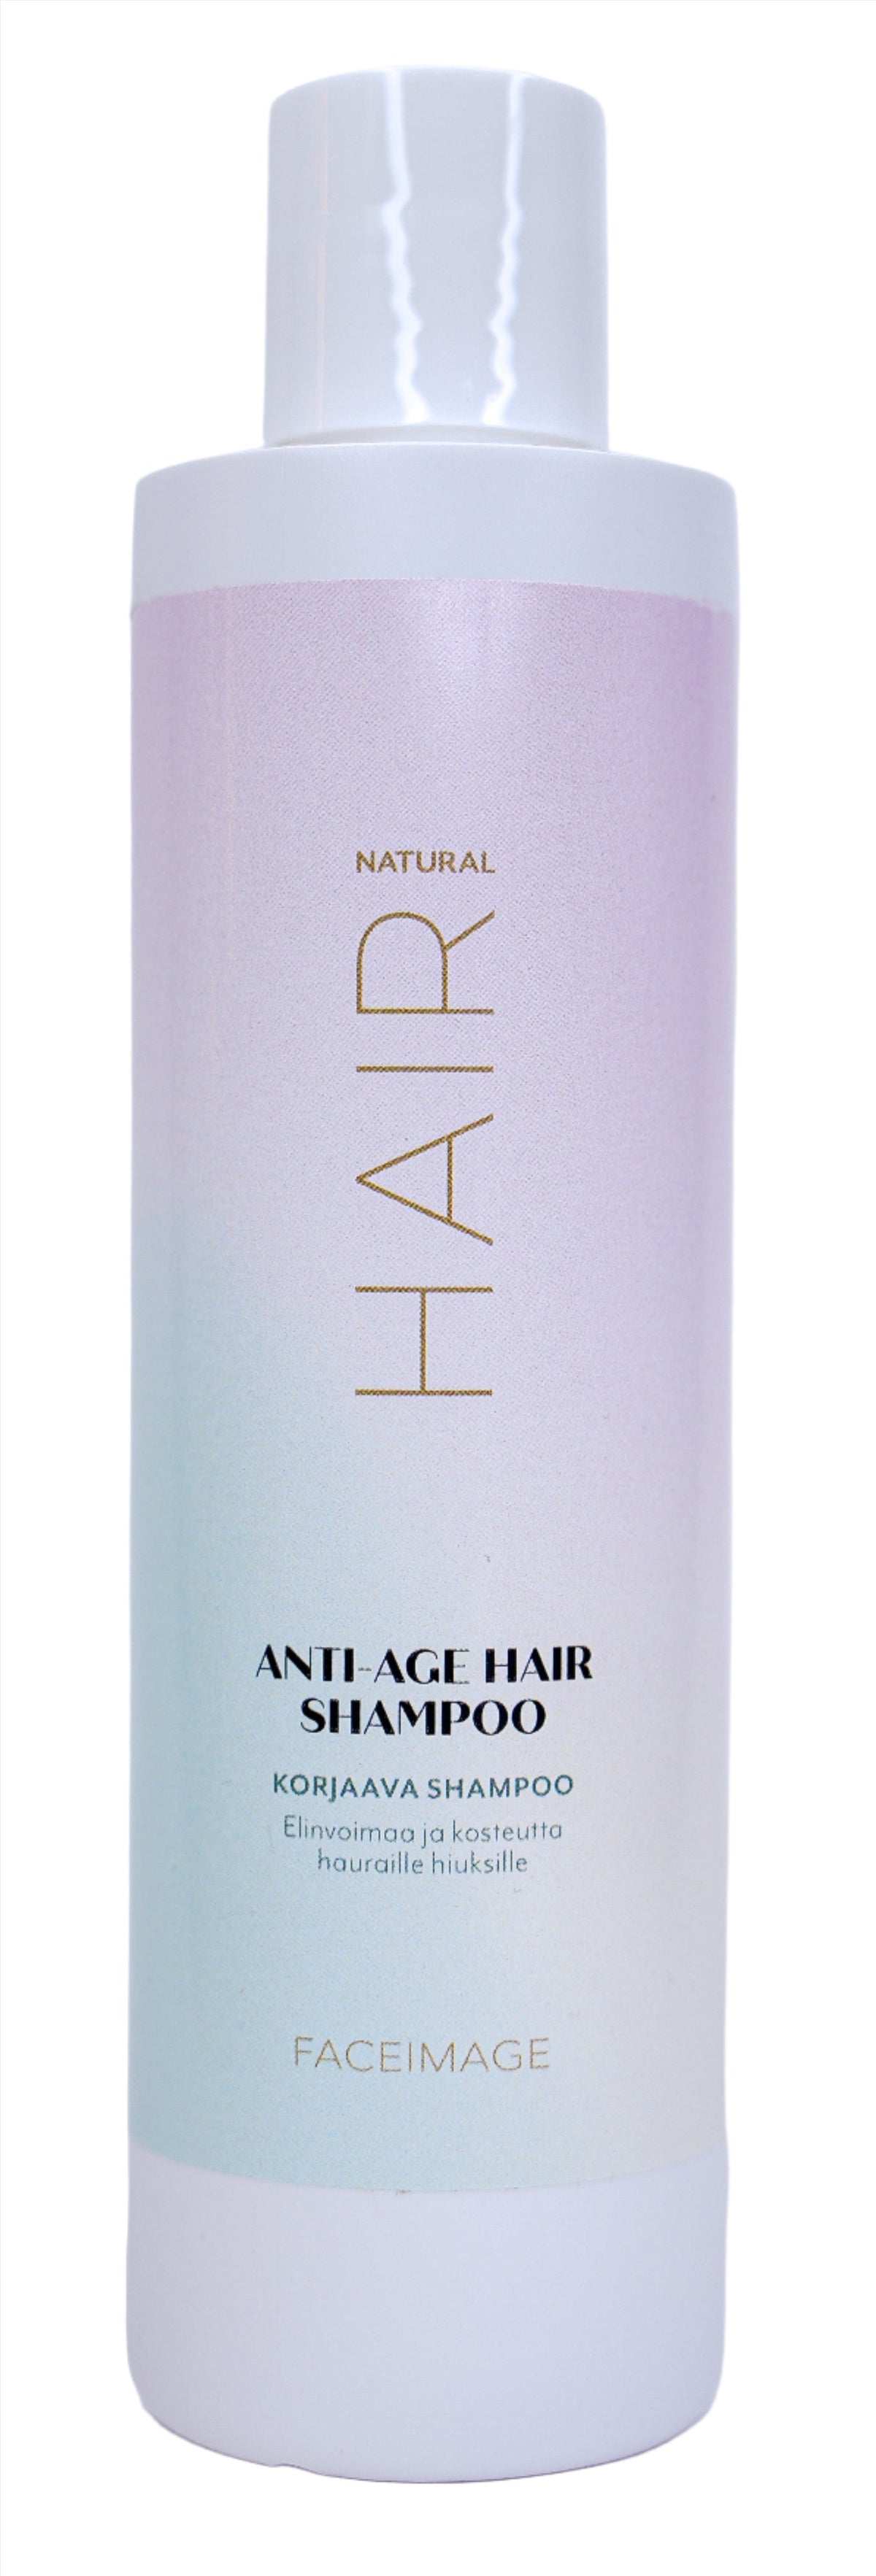 Faceimage Anti-Age Hair Shampoo - Korjaava Shampoo 250 ml